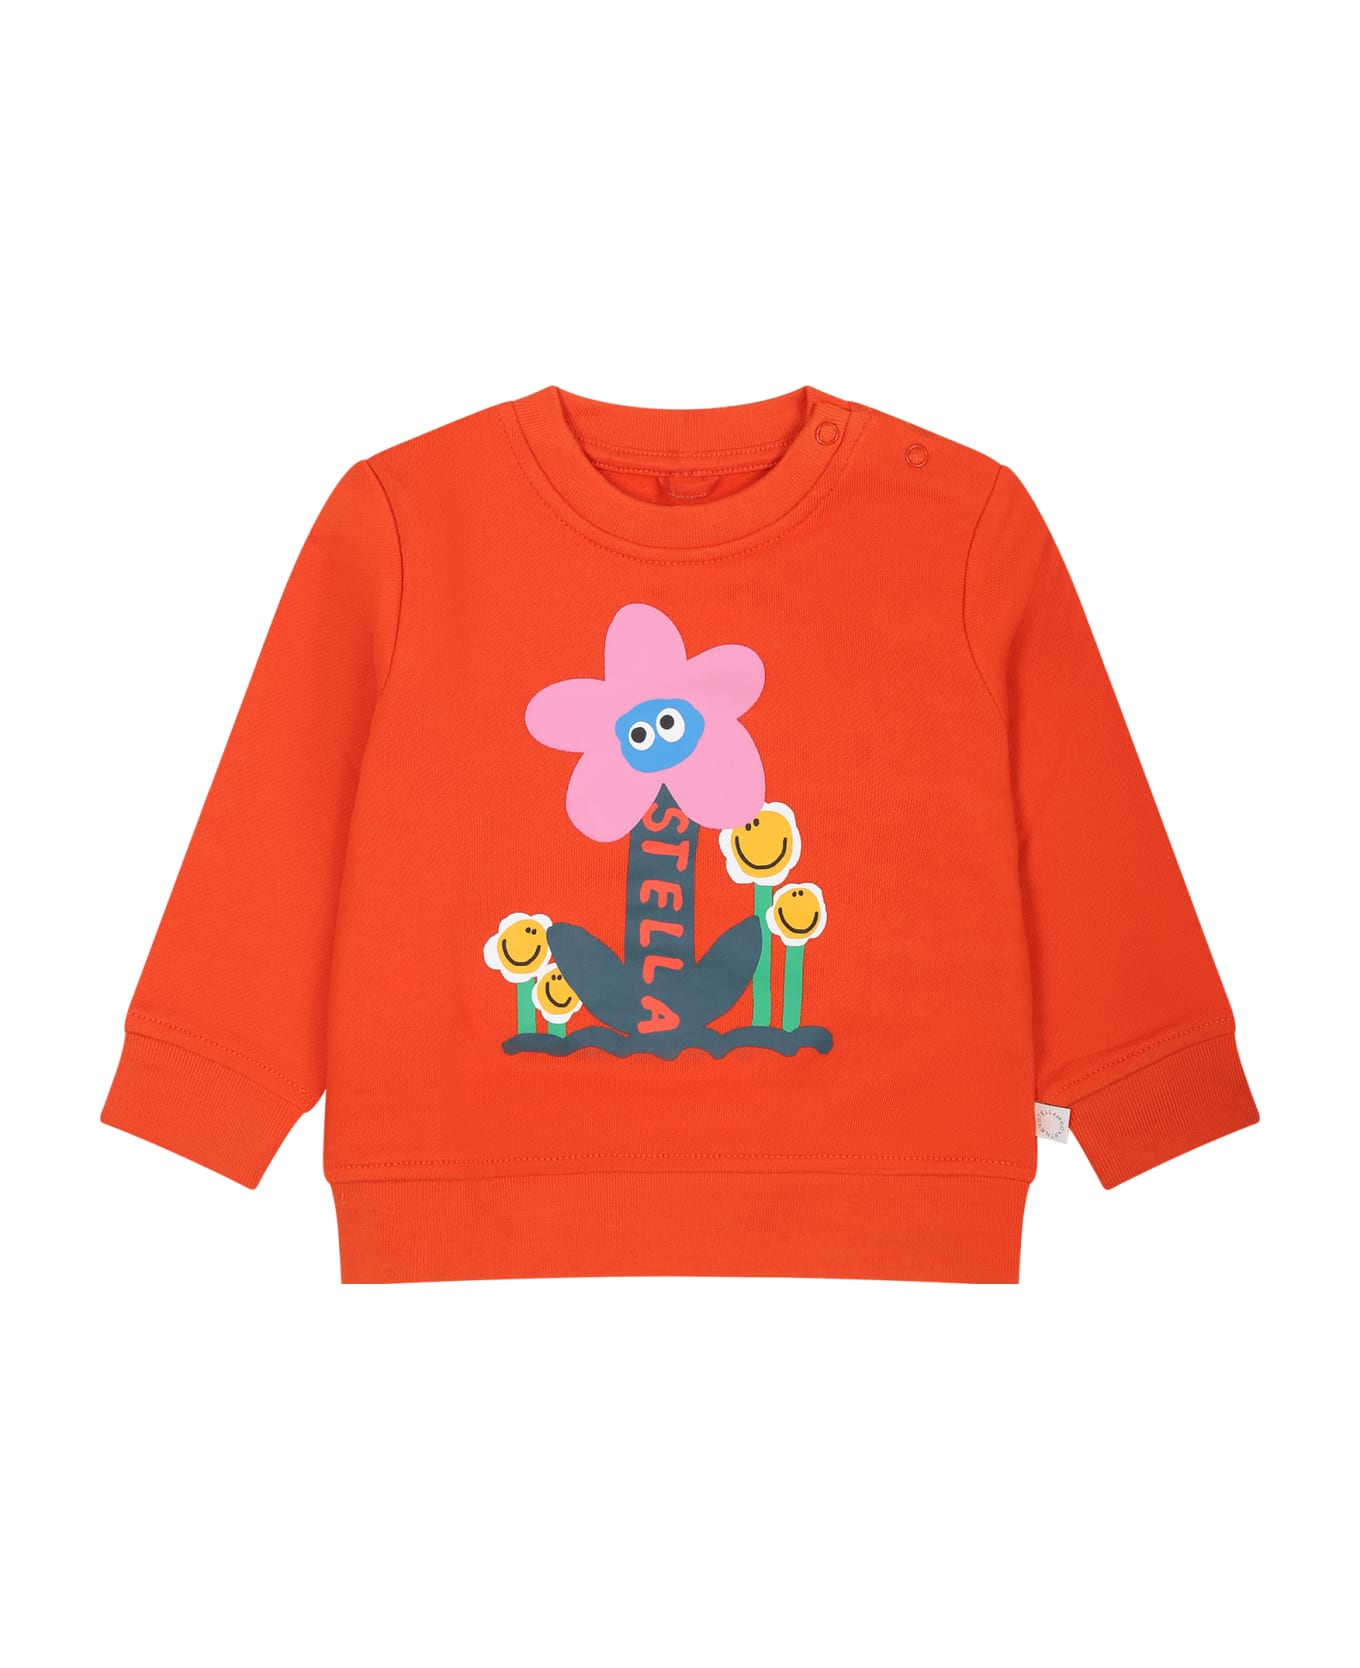 Stella McCartney Kids Orange Sweatshirt For Baby Girl With Flowesr And Logo - Orange